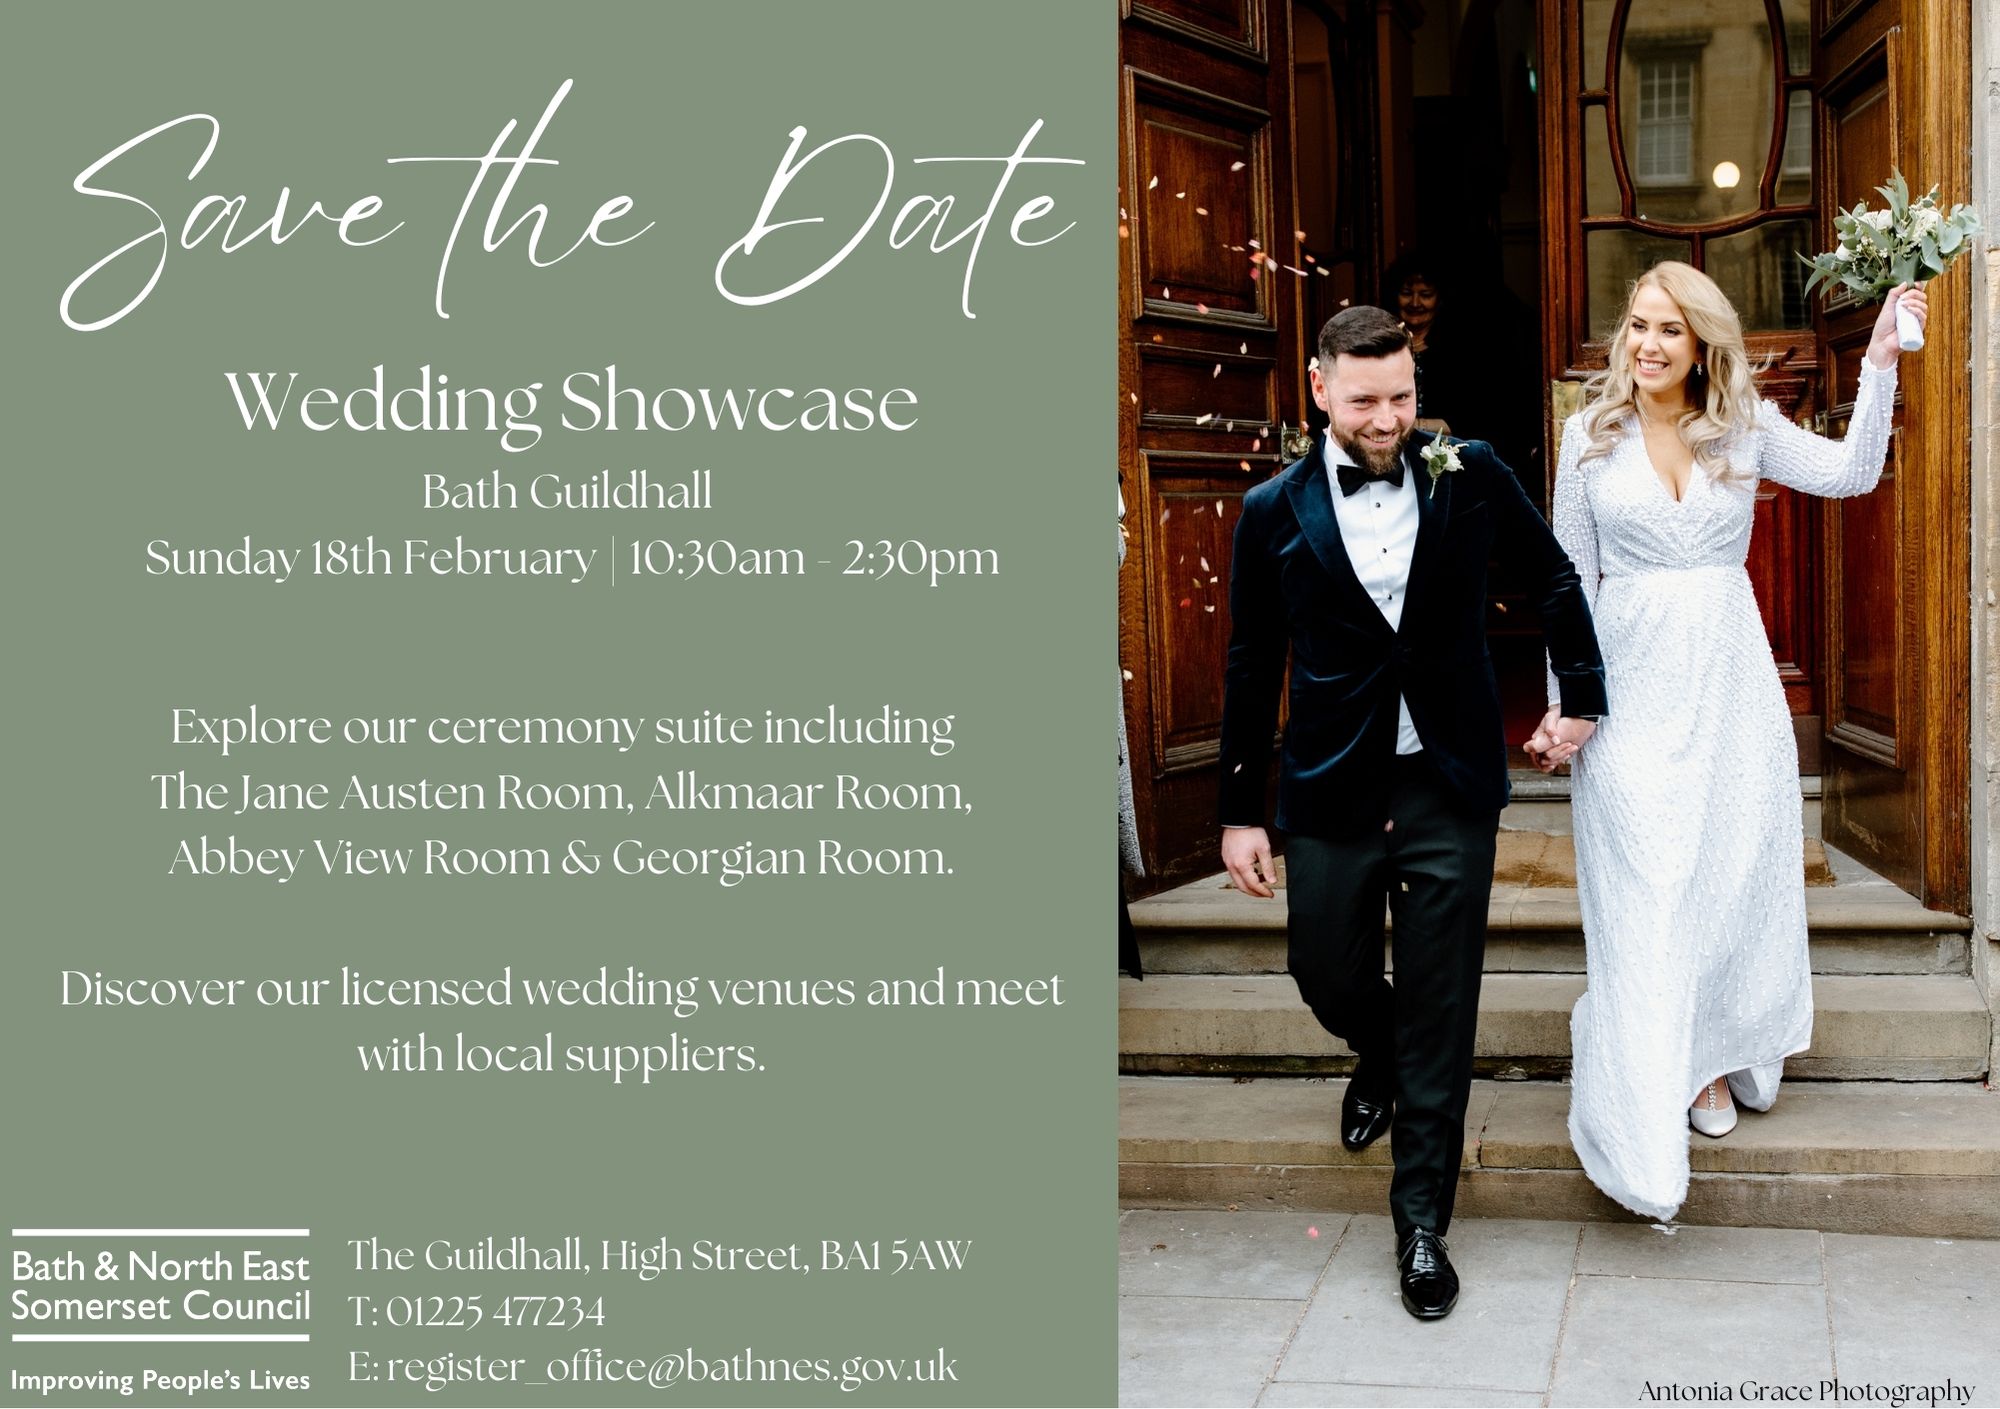 Guildhall wedding showcase details